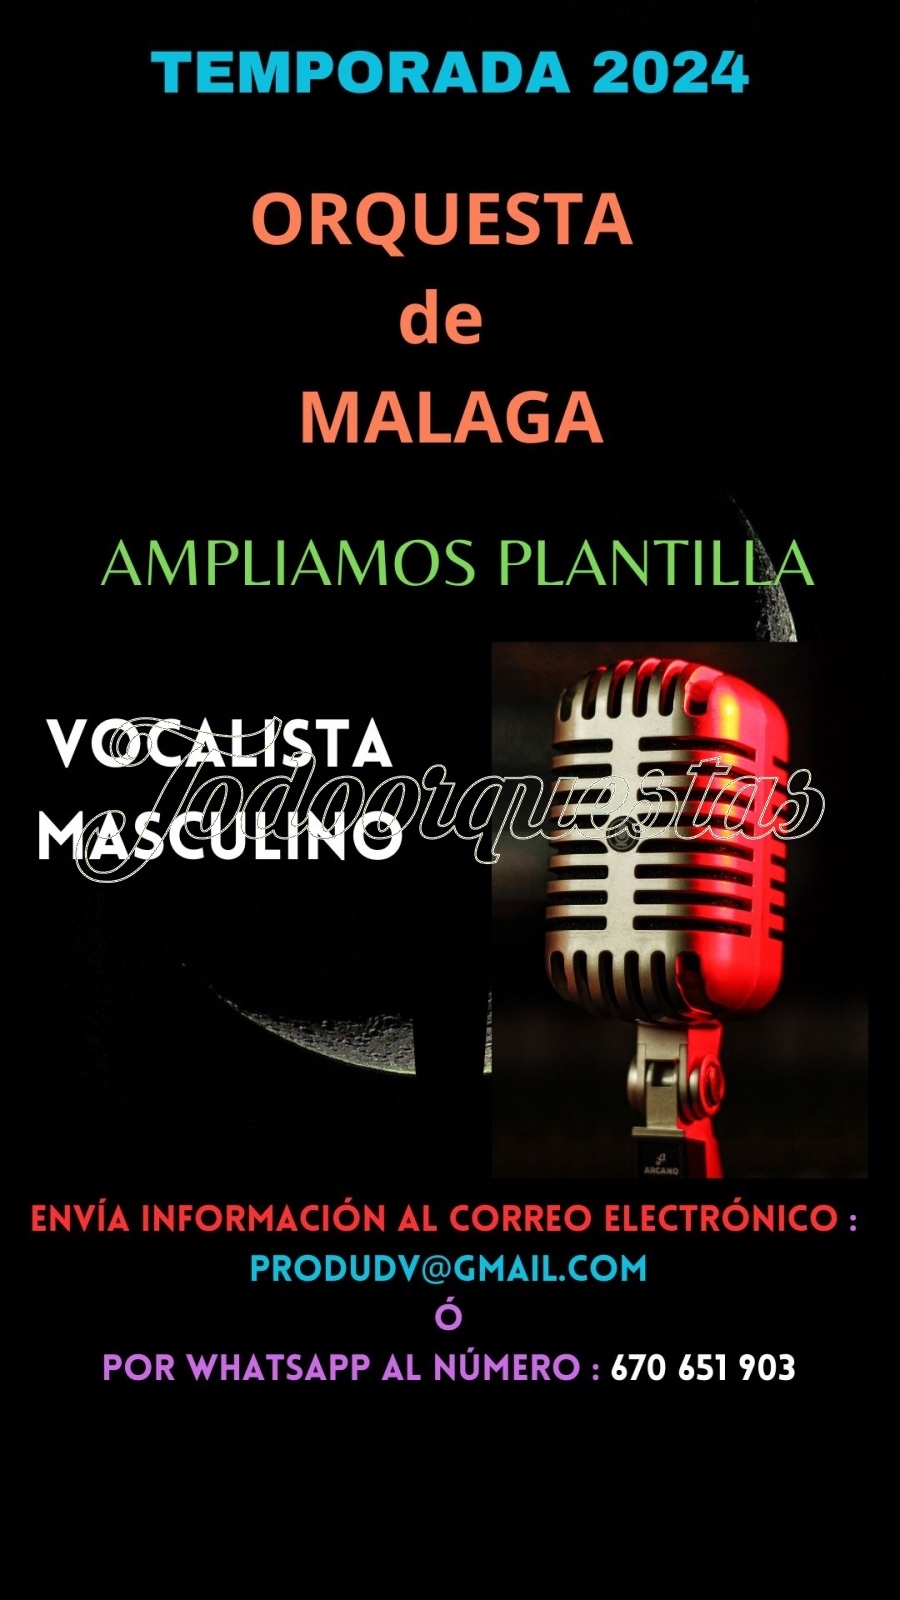 ORQUESTA (de Málaga ) AMPLIA PLANTILLA- VOCALISTA MASCULINO